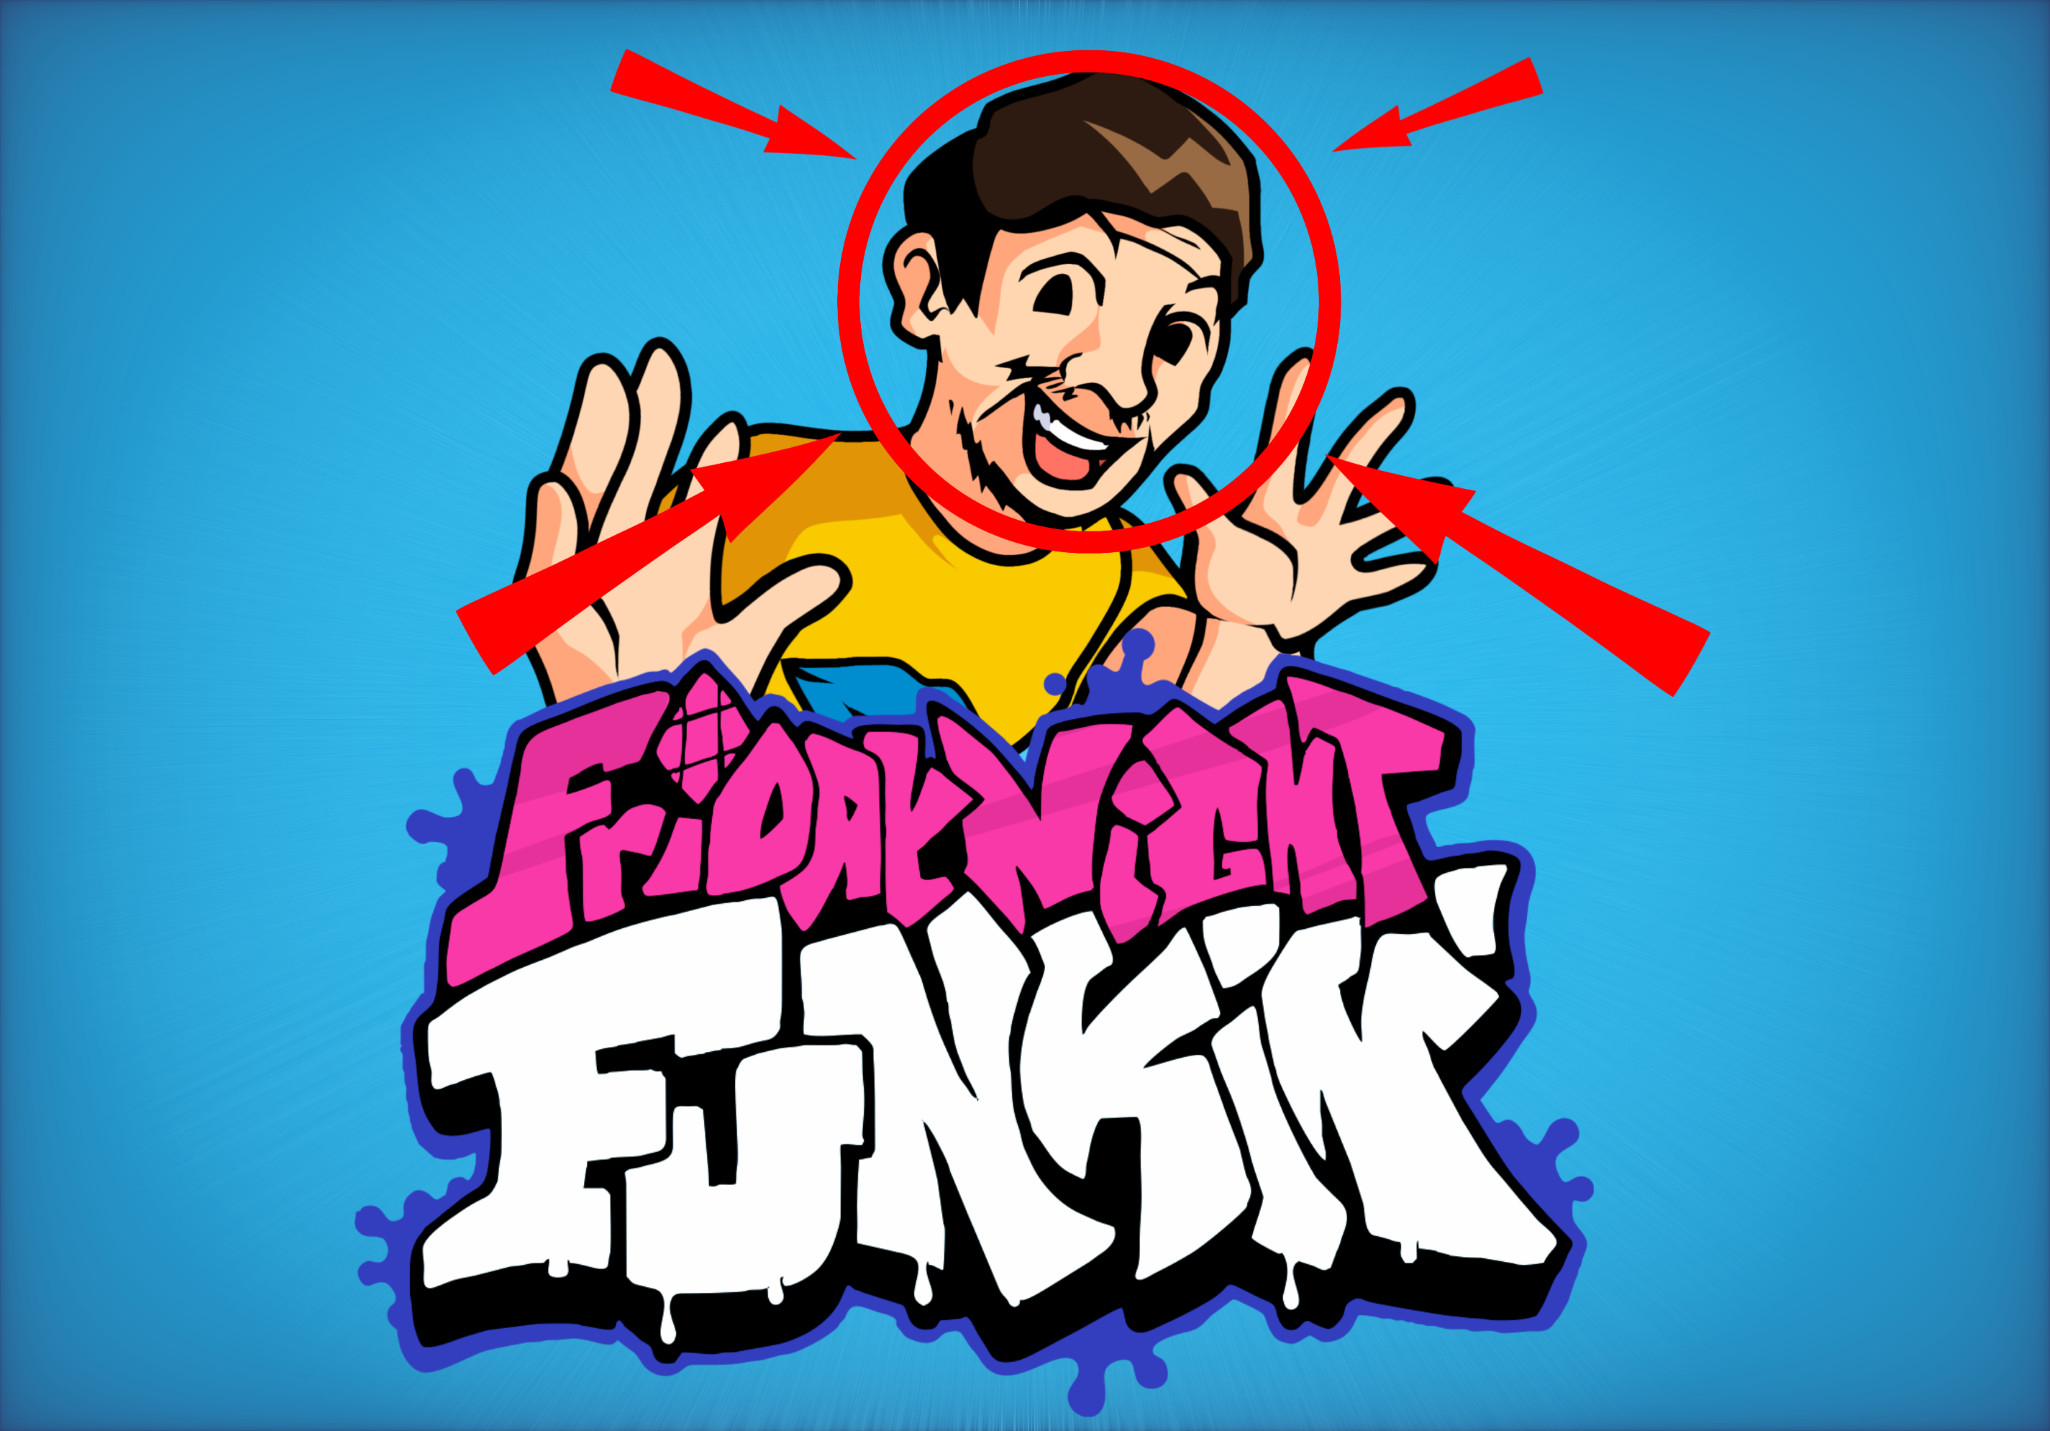 FNF MrBeast Meme - Play FNF MrBeast Meme On FNF - FNF GAMES - FNF MODS